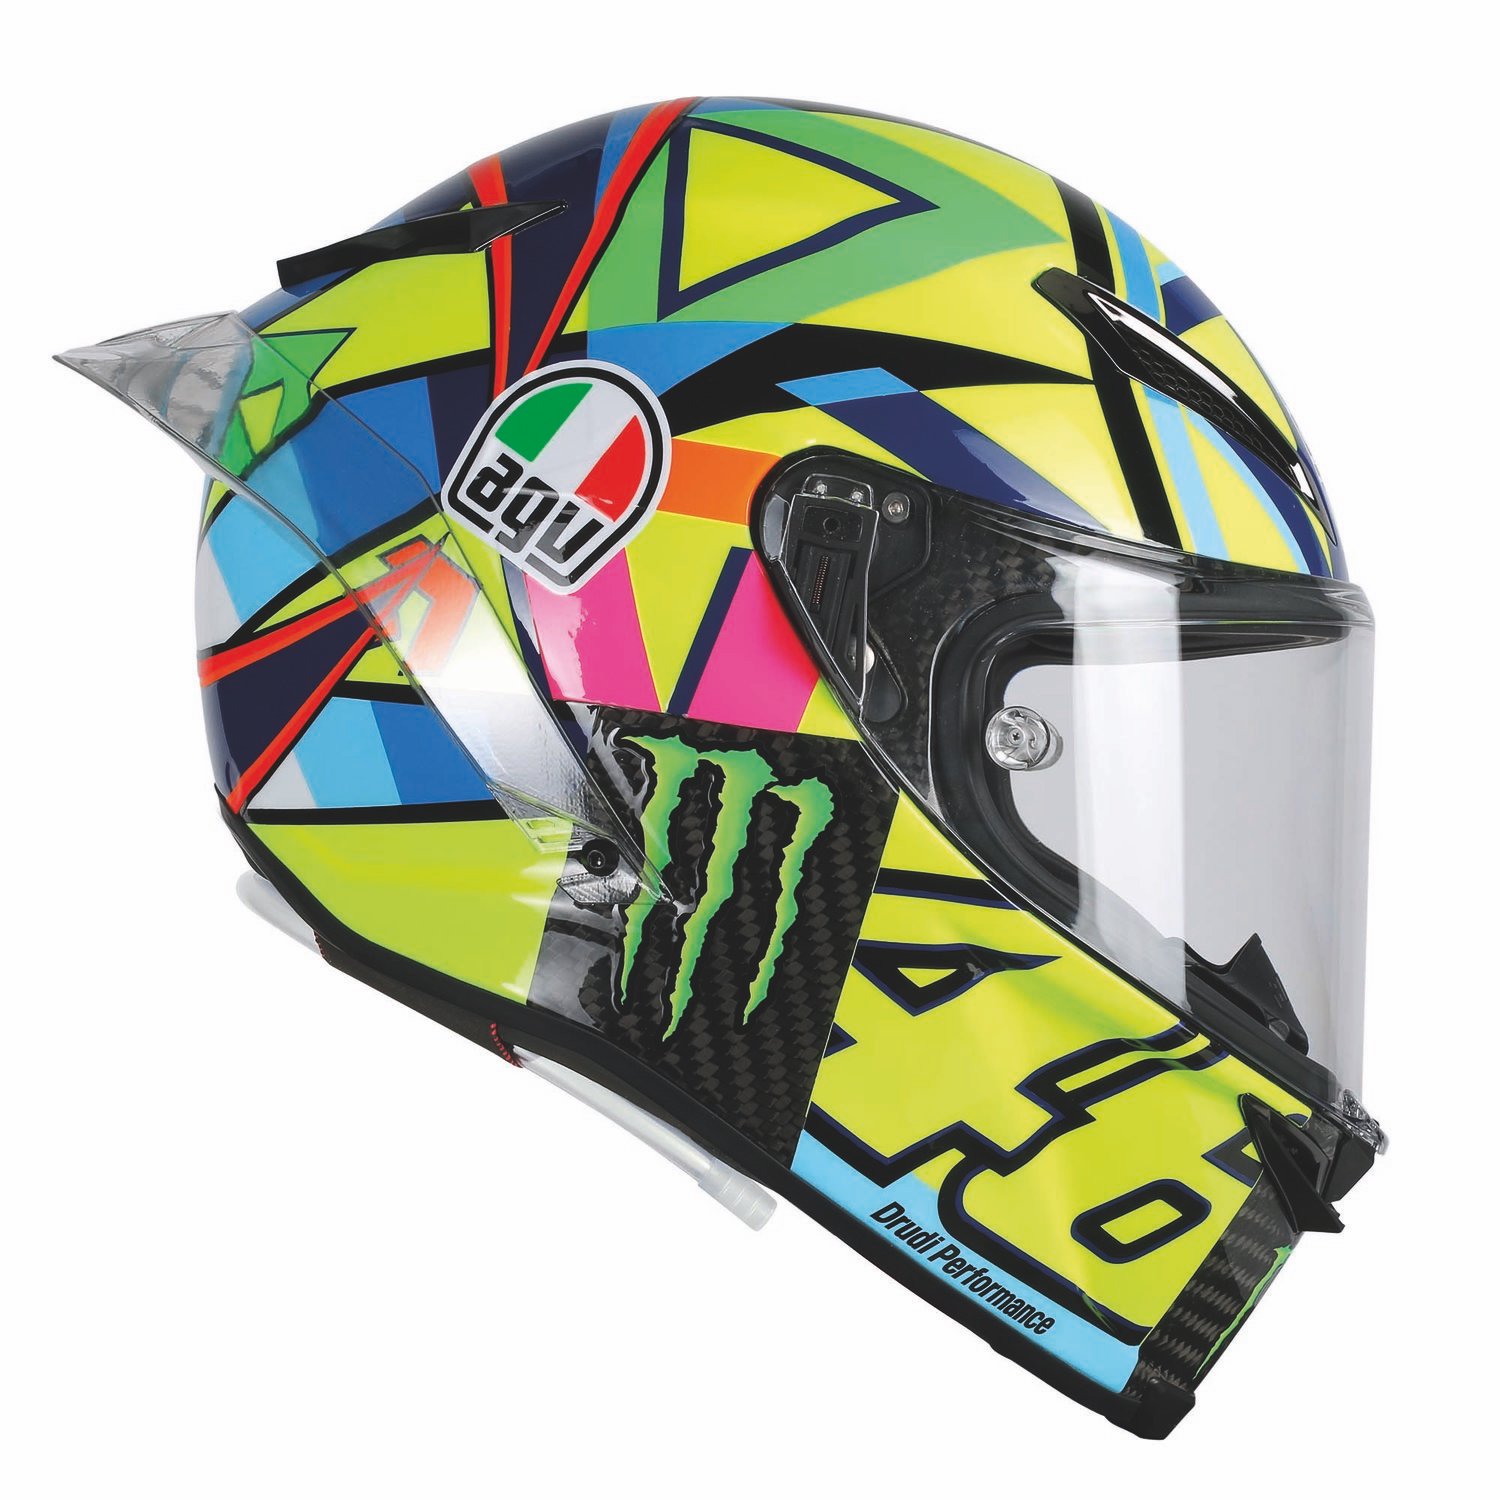 agv-pista-gp-r-race-helmet-13.jpg